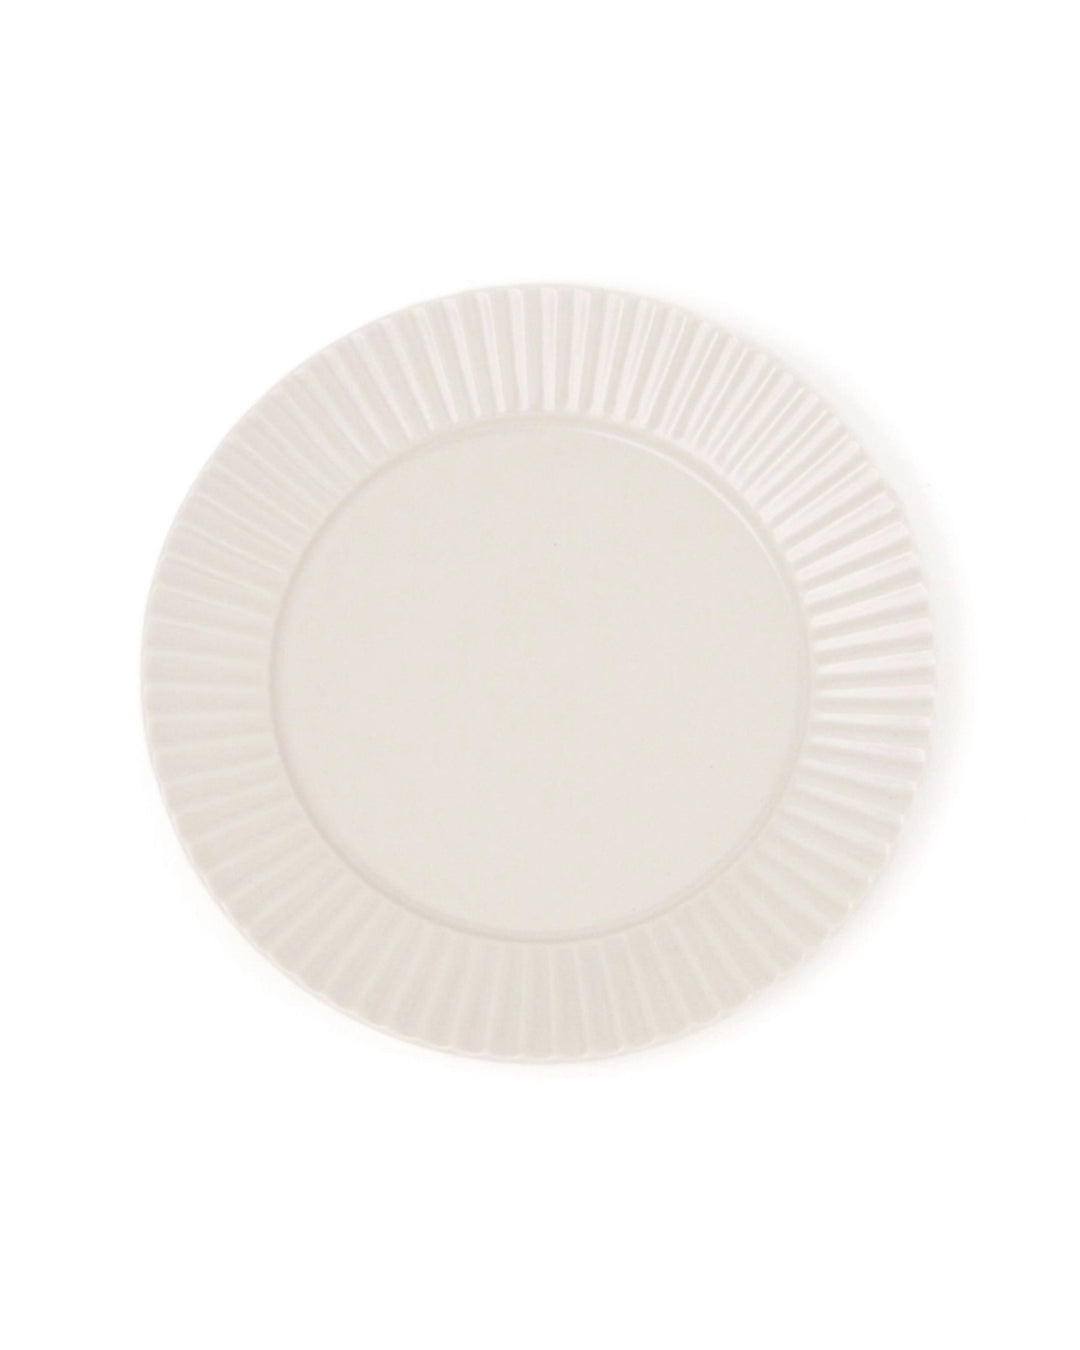 Lakole Mino Ware Small Serving Plate - White